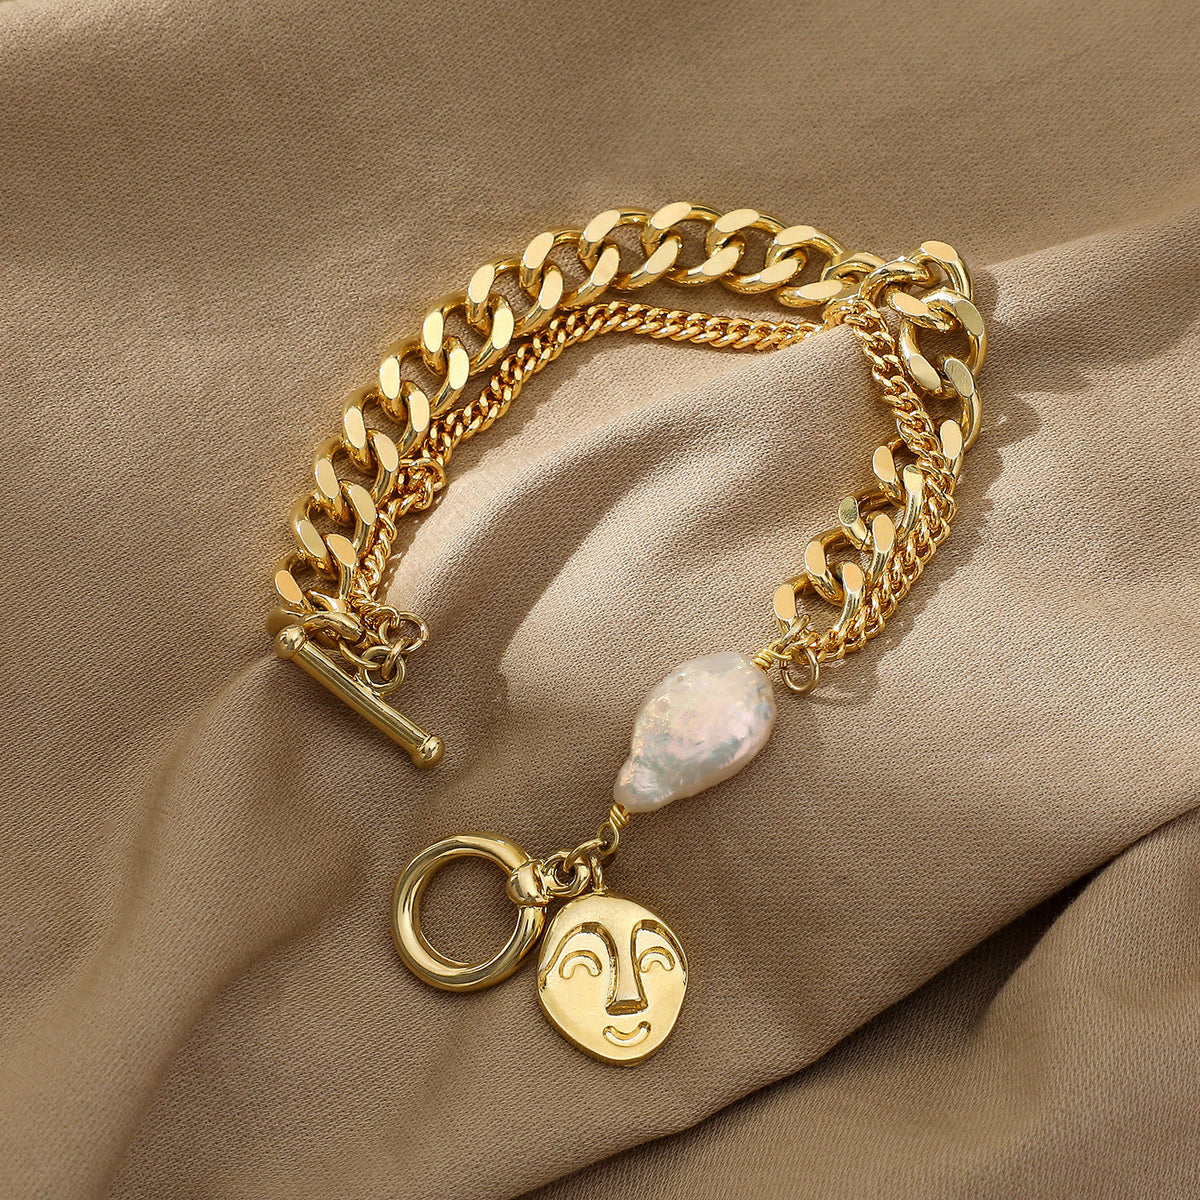 1# BEST Gold Pearl Chain Bracelet Jewelry Gift for Women | #1 Best Most ...